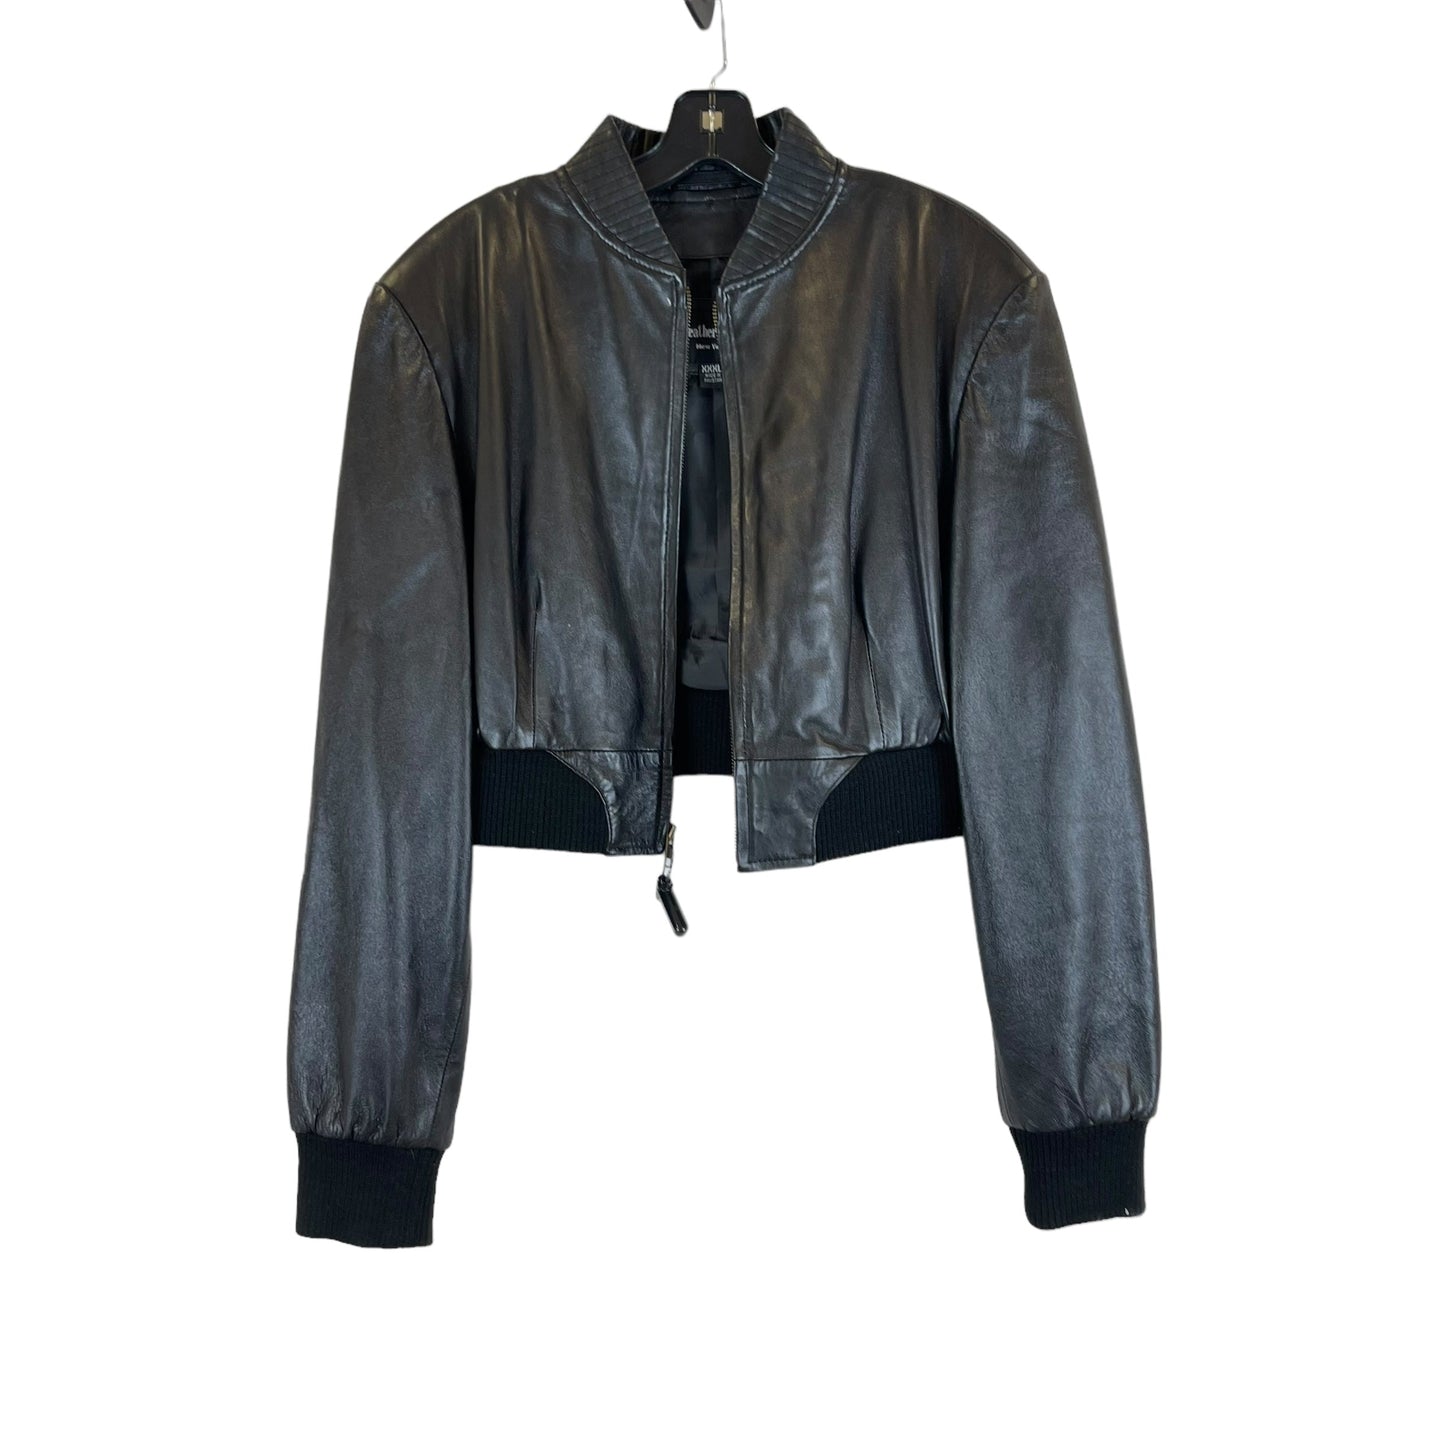 Jacket Other By The Leather Company Size: Xxxl